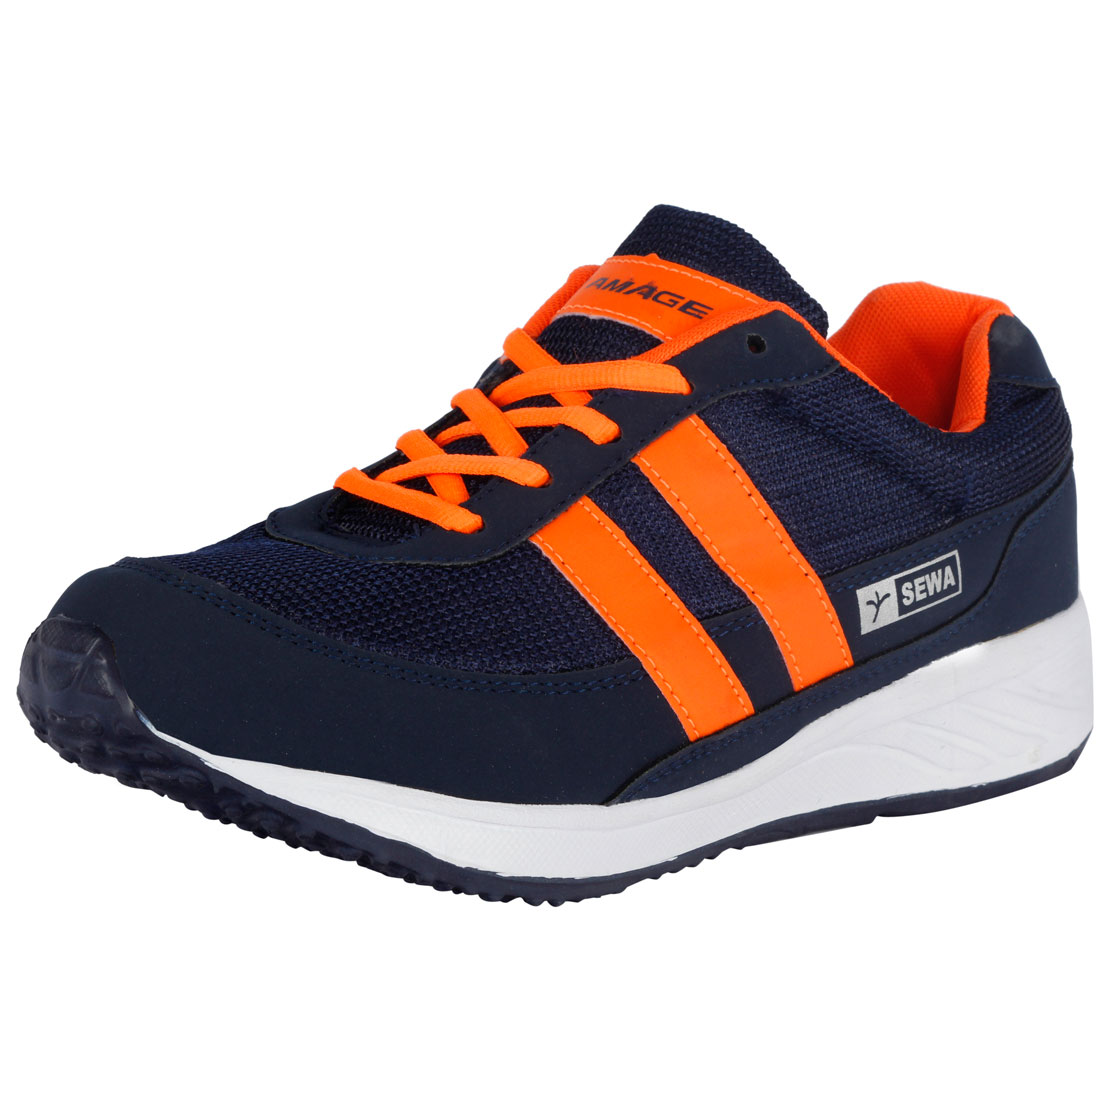 Buy Amage Blue Orange Men Sports Running Shoes Online @ ₹609 from ShopClues